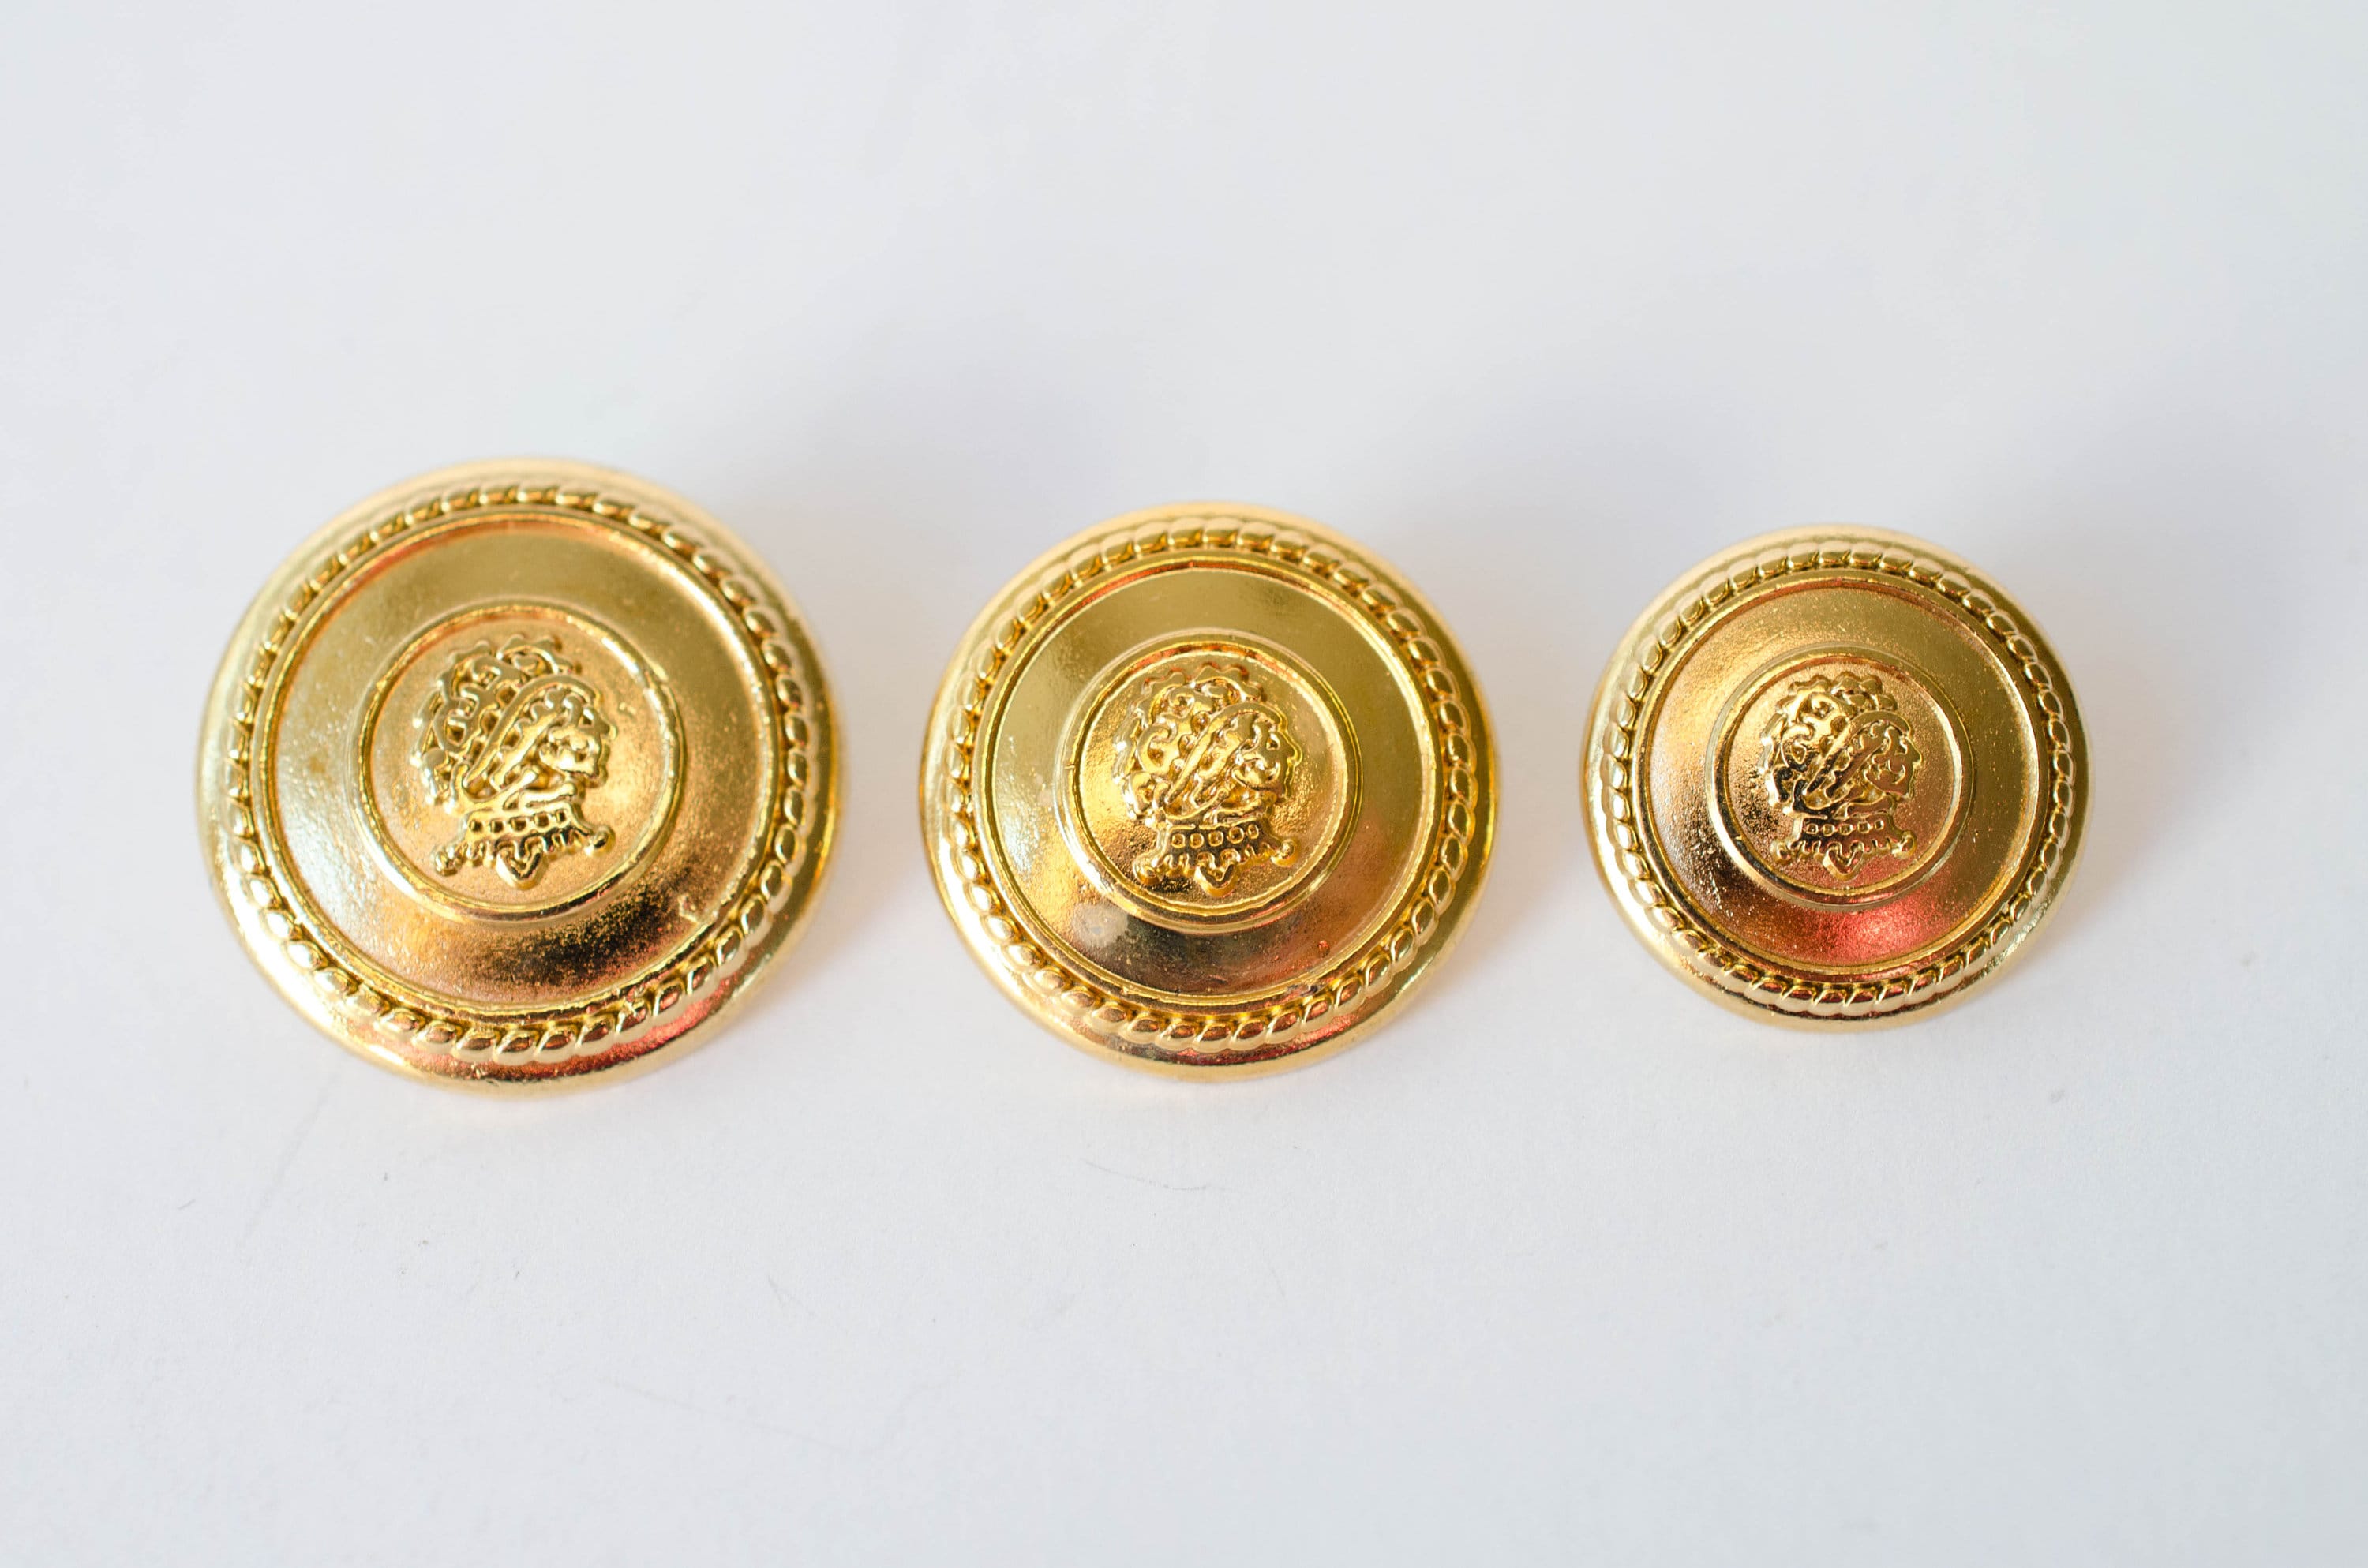 40 Pcs Gold Buttons for Blazer, Vintage Gold Buttons Badge Sewing Buttons  for Blazer Suit Coat Uniform Jacket (4 Size, 15/18/20/25mm)